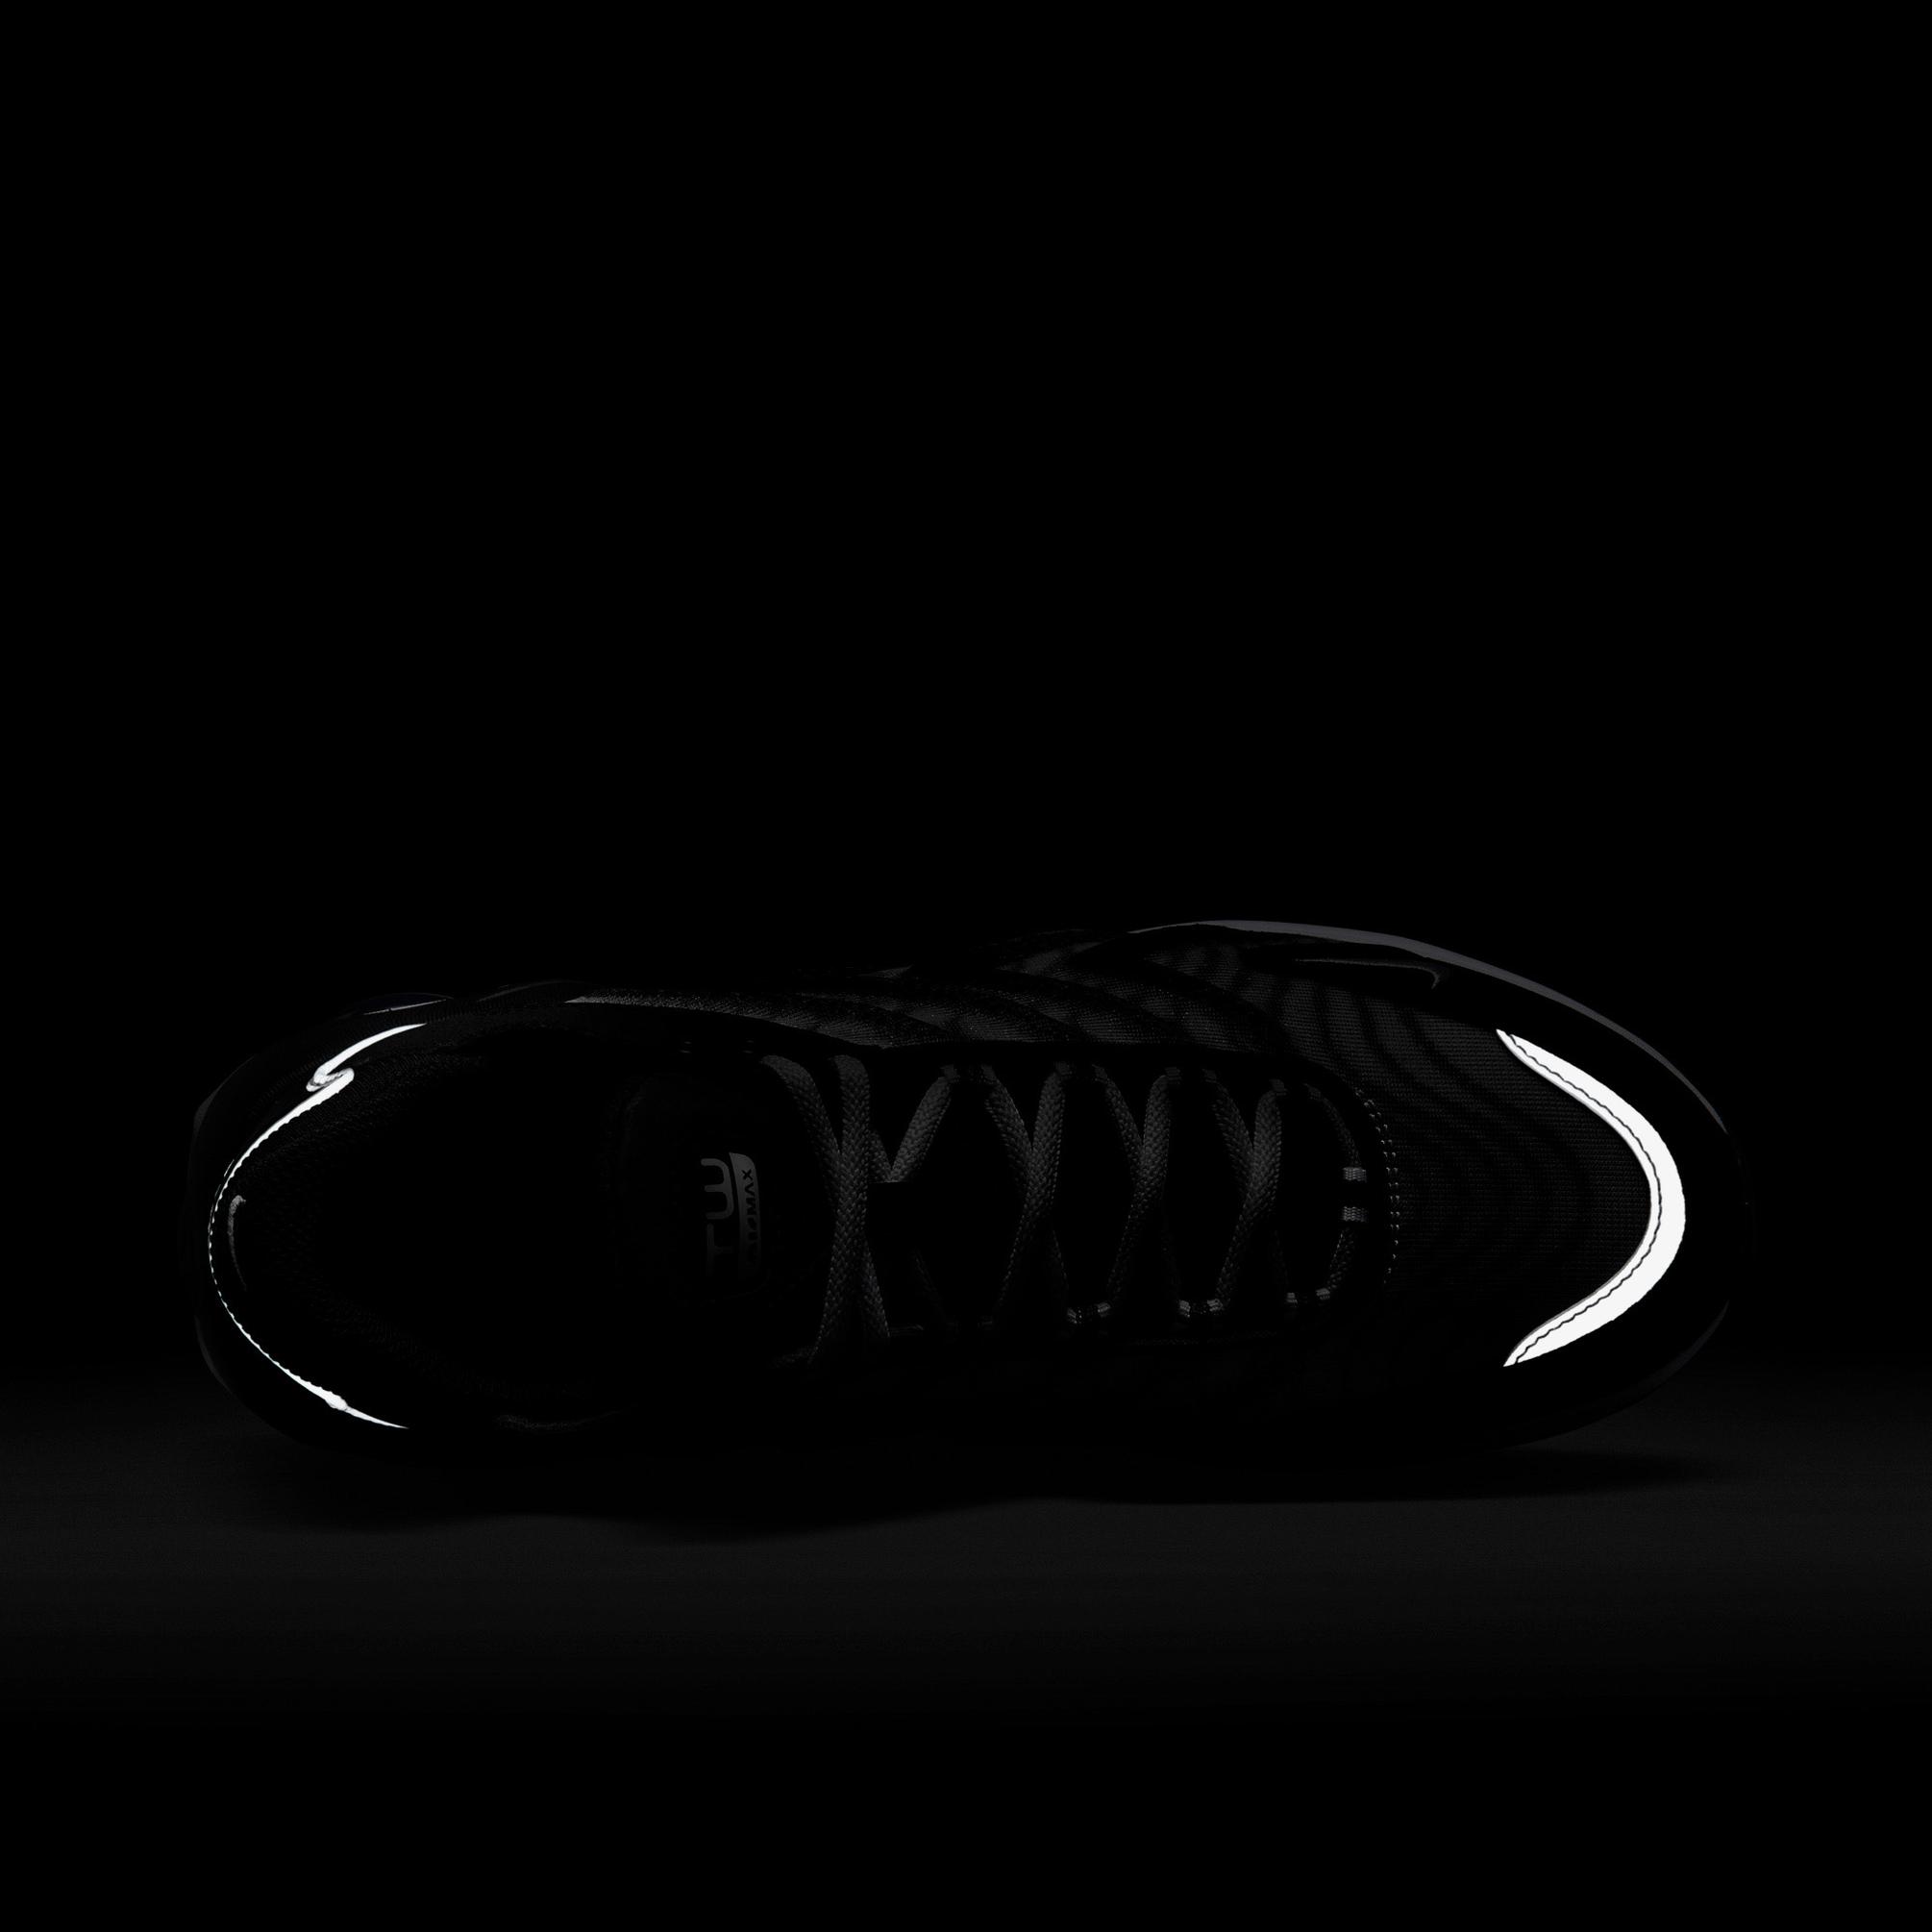  Nike Air Max Erkek Siyah/Gri Spor Ayakkabı